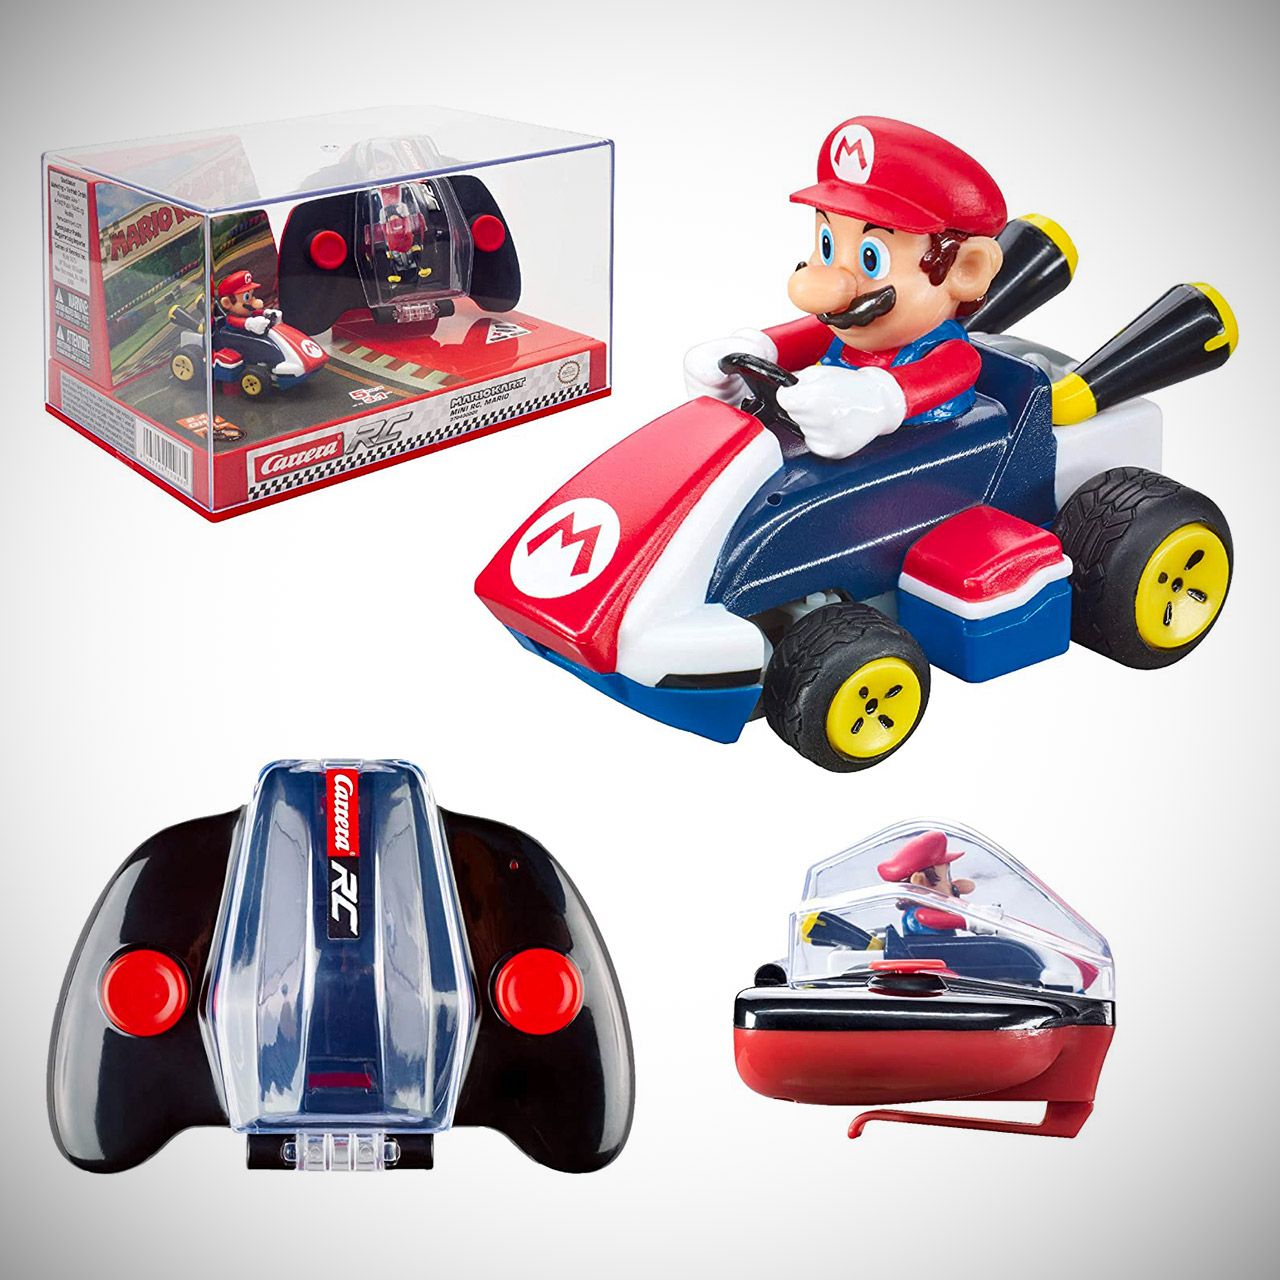 Carrera Nintendo Mario Kart รถควบคุมระยะไกล